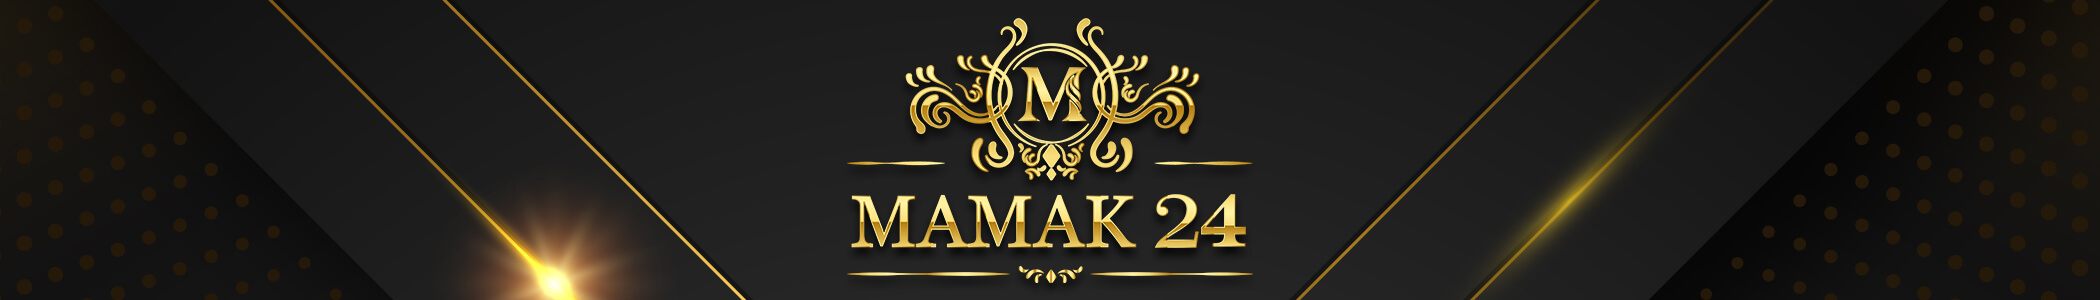 Mamak24 - Pop up image 1